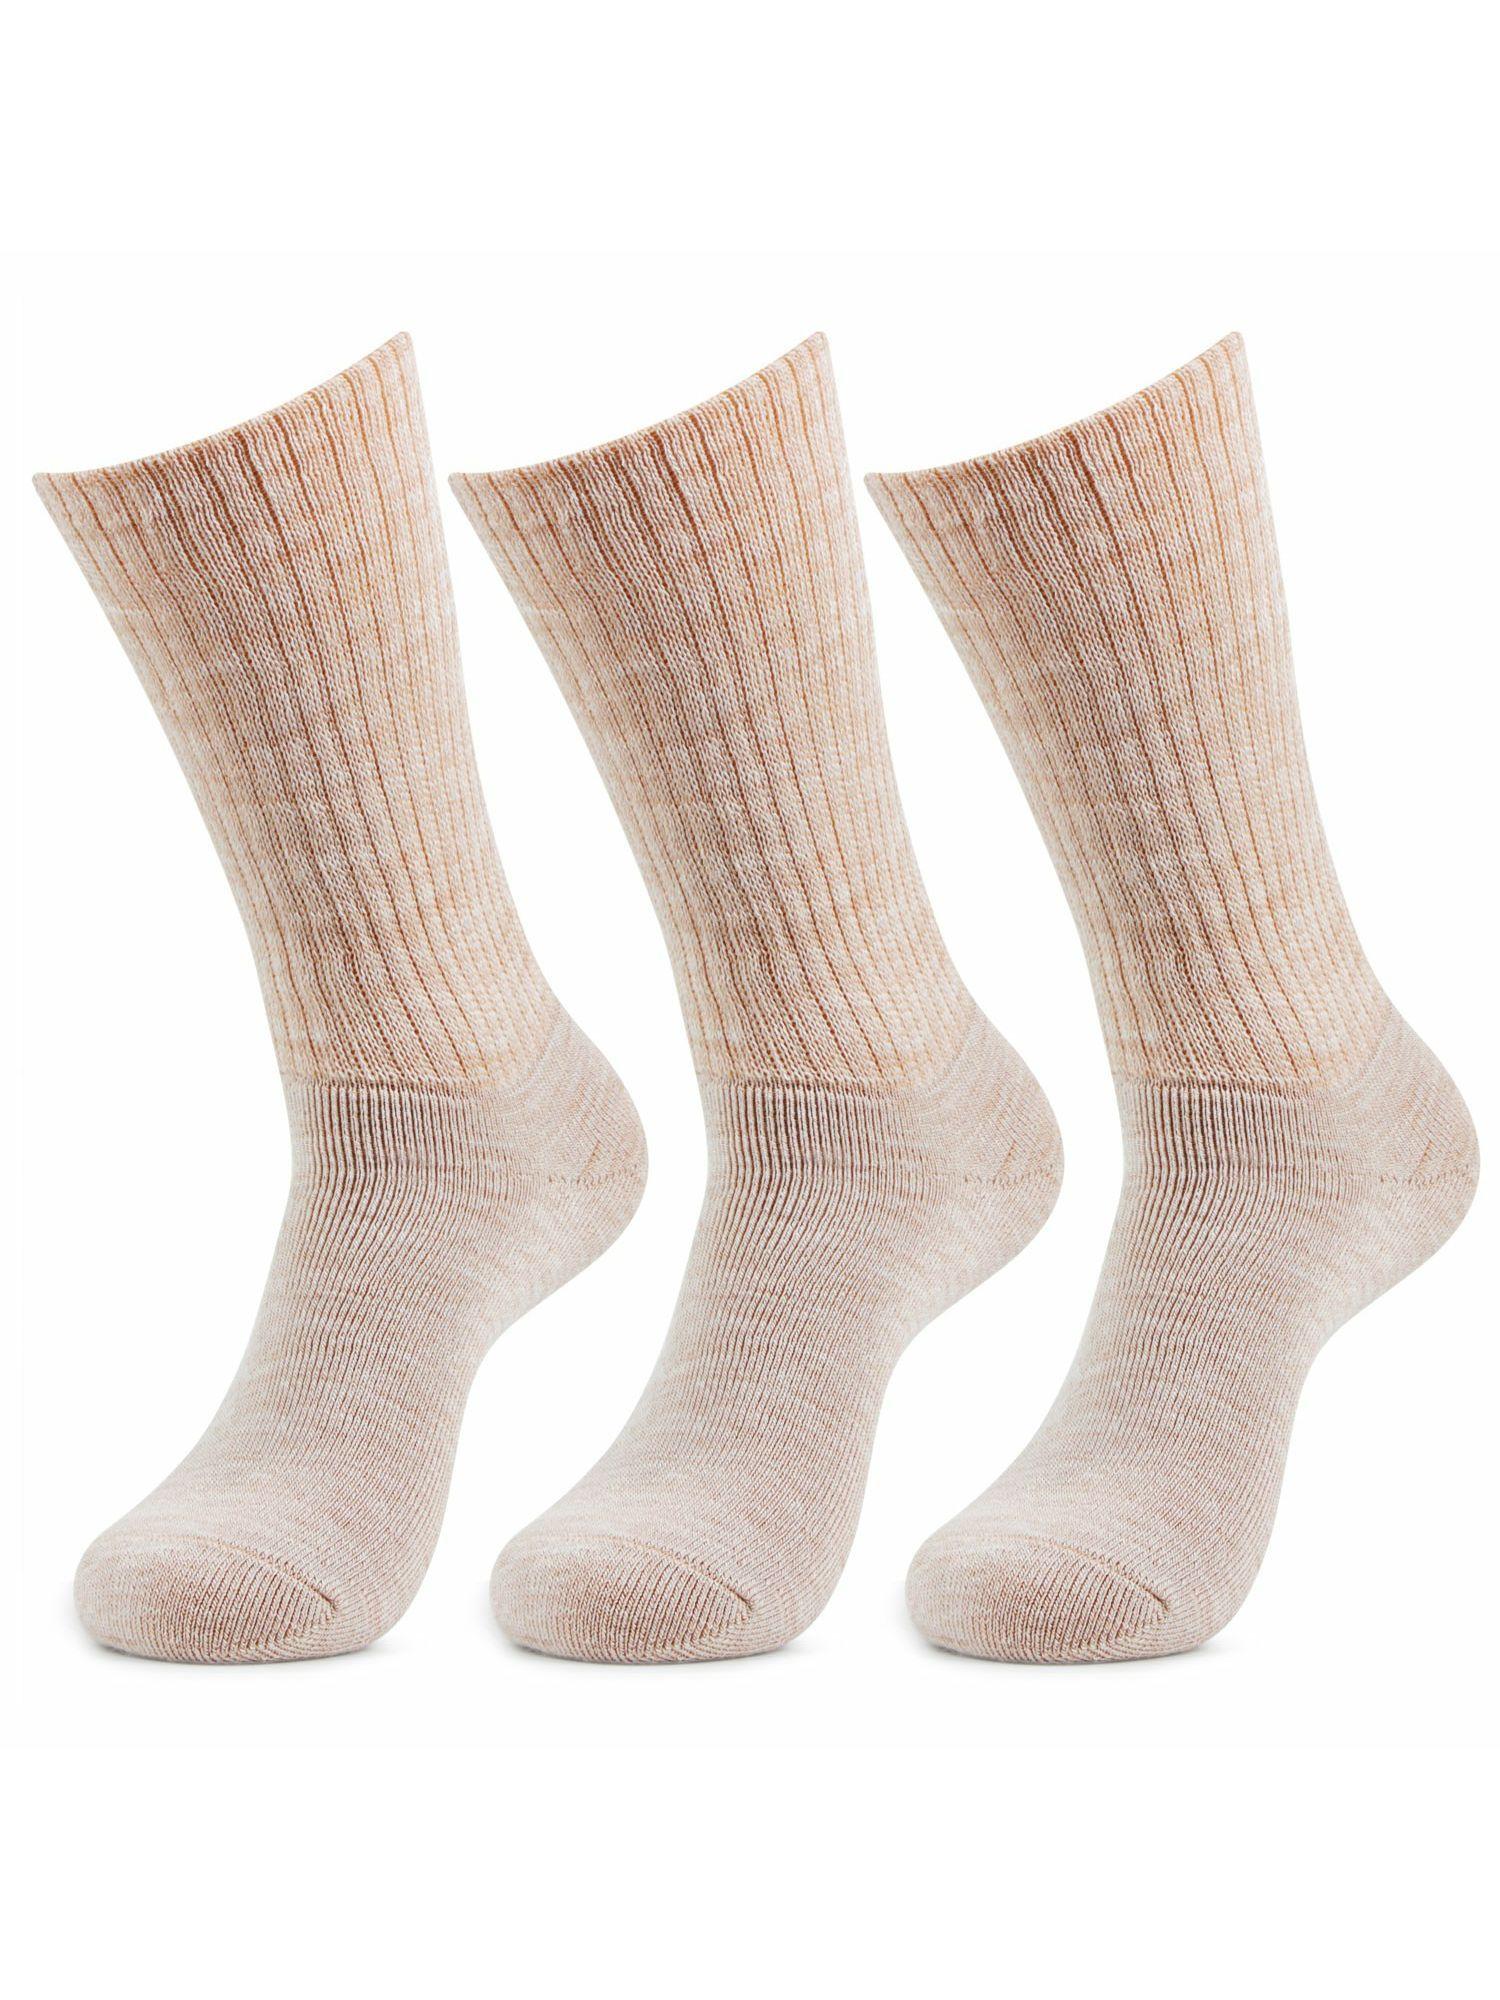 womens skin woolen socks -pack of 3